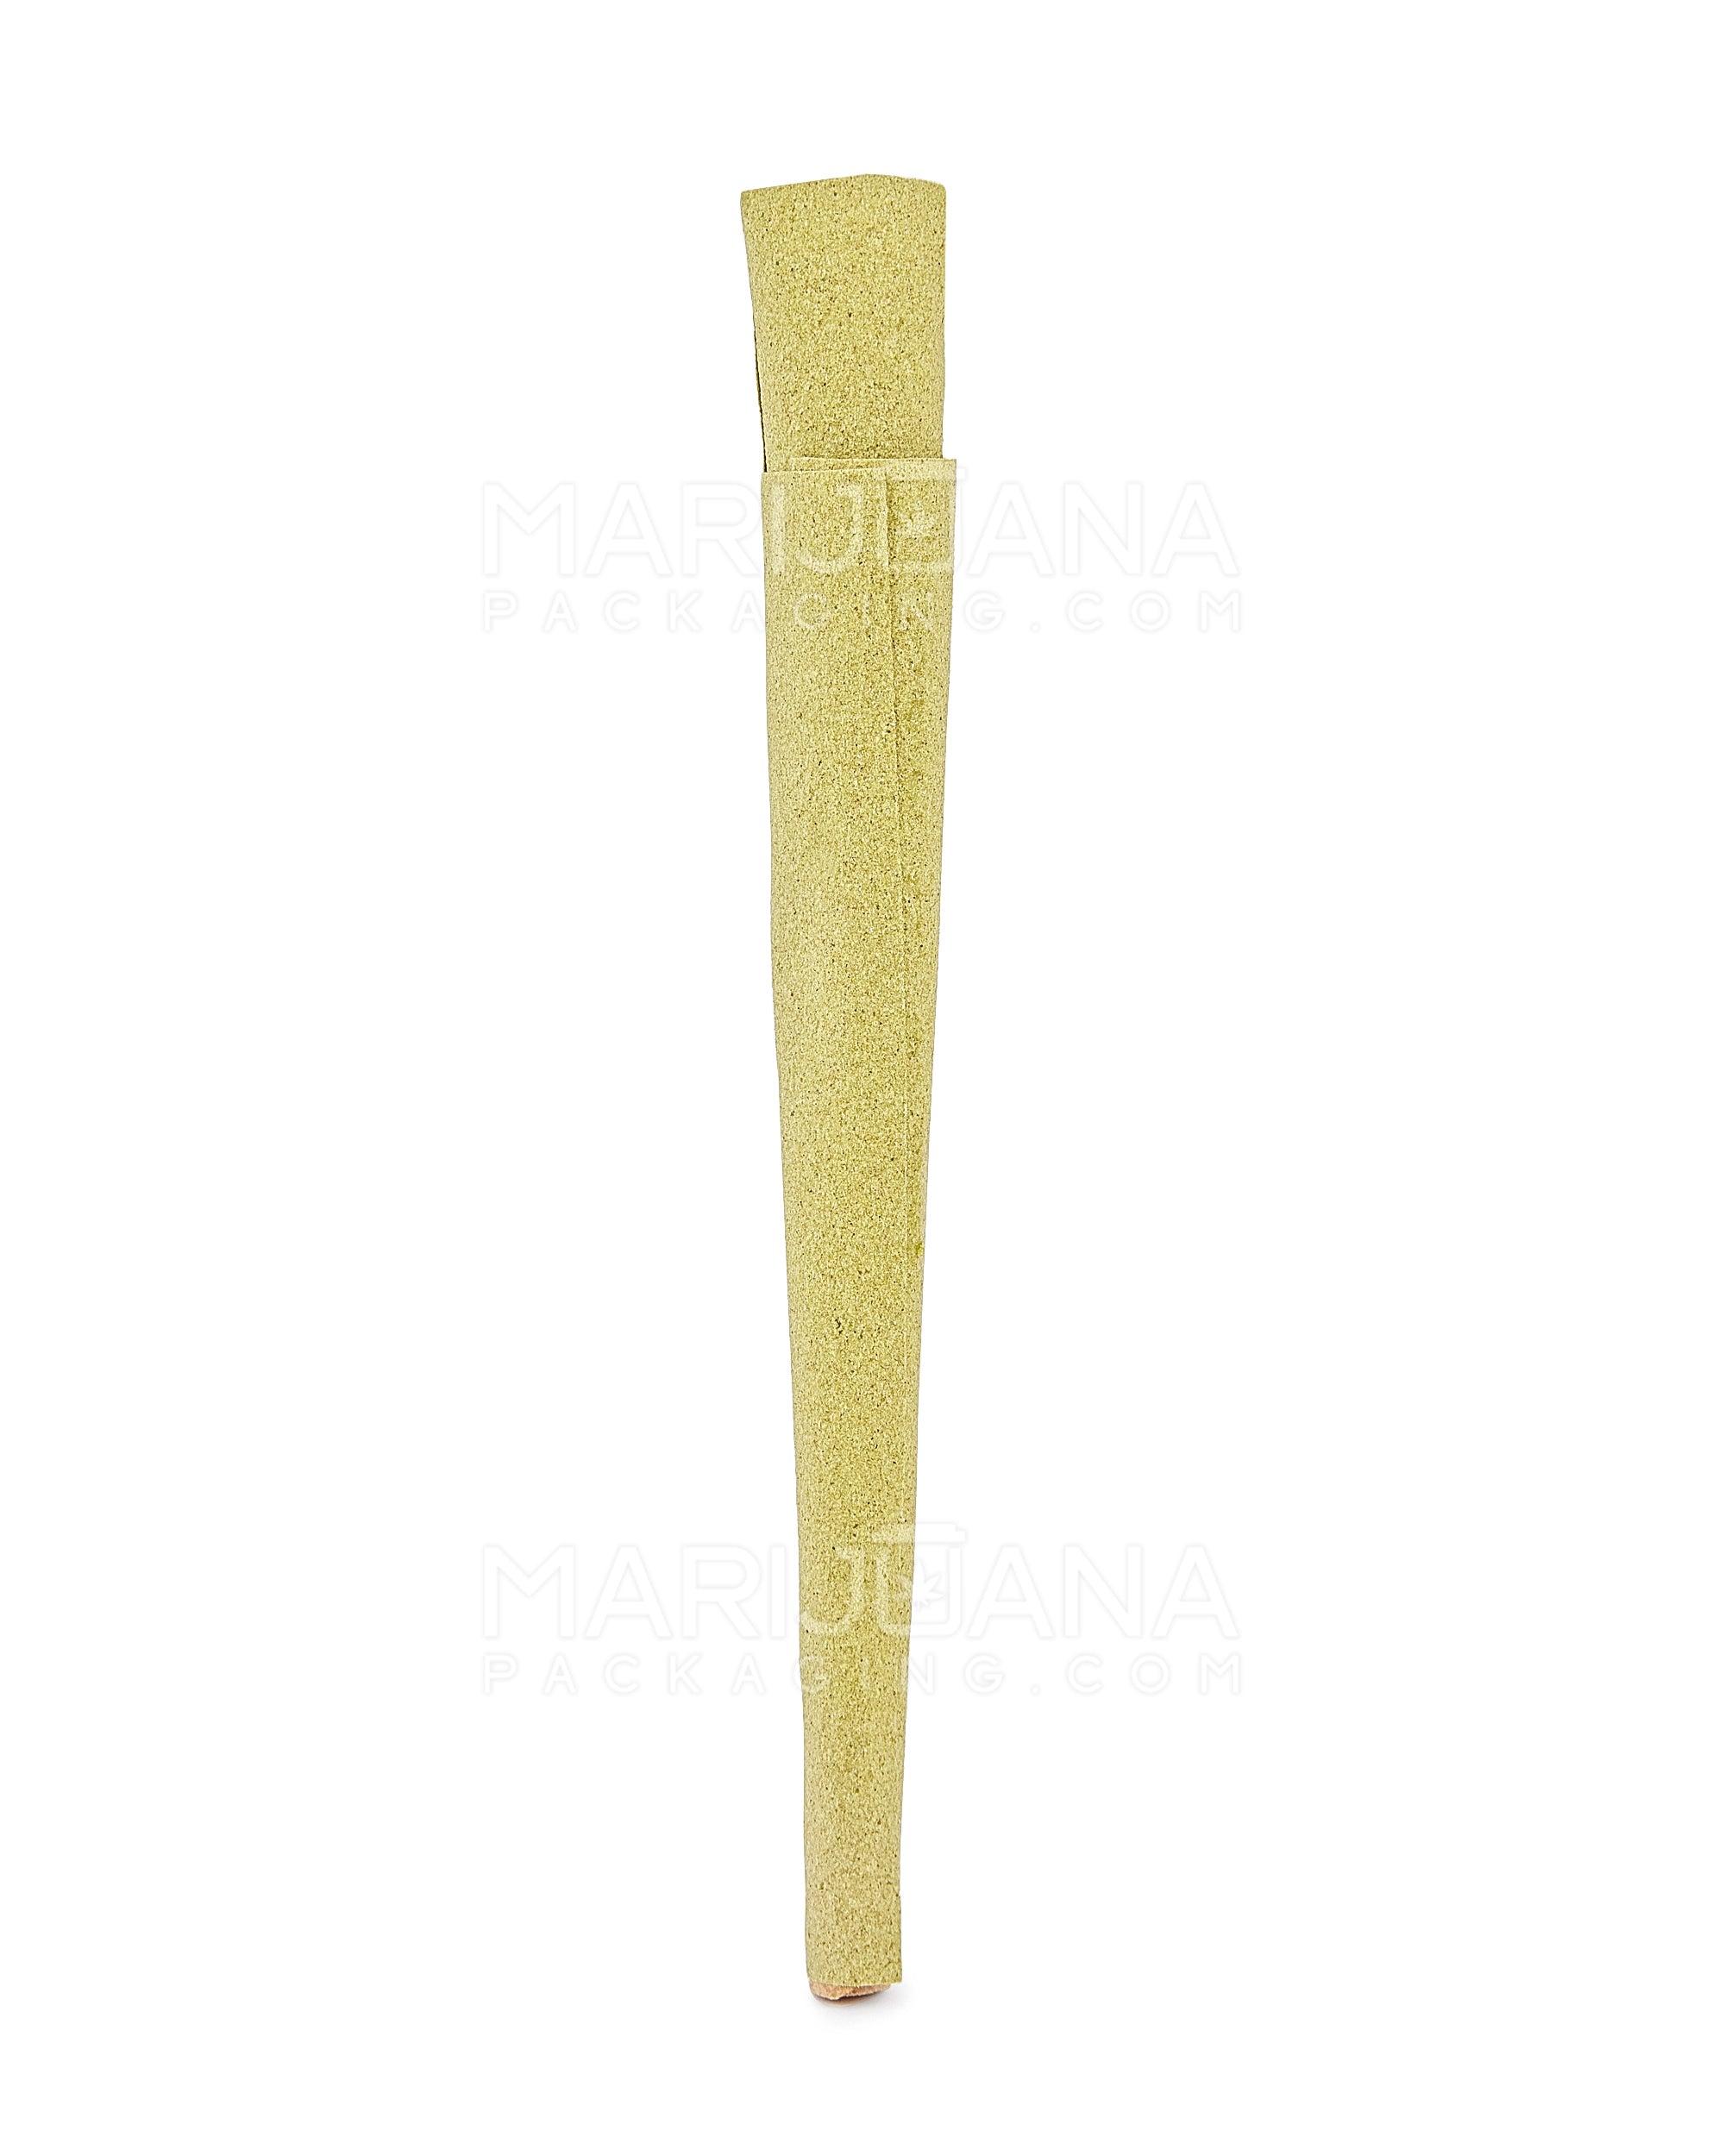 KUSH | 'Retail Display' Herbal Hemp Conical Wraps | 157mm - Sweet - 15 Count - 6